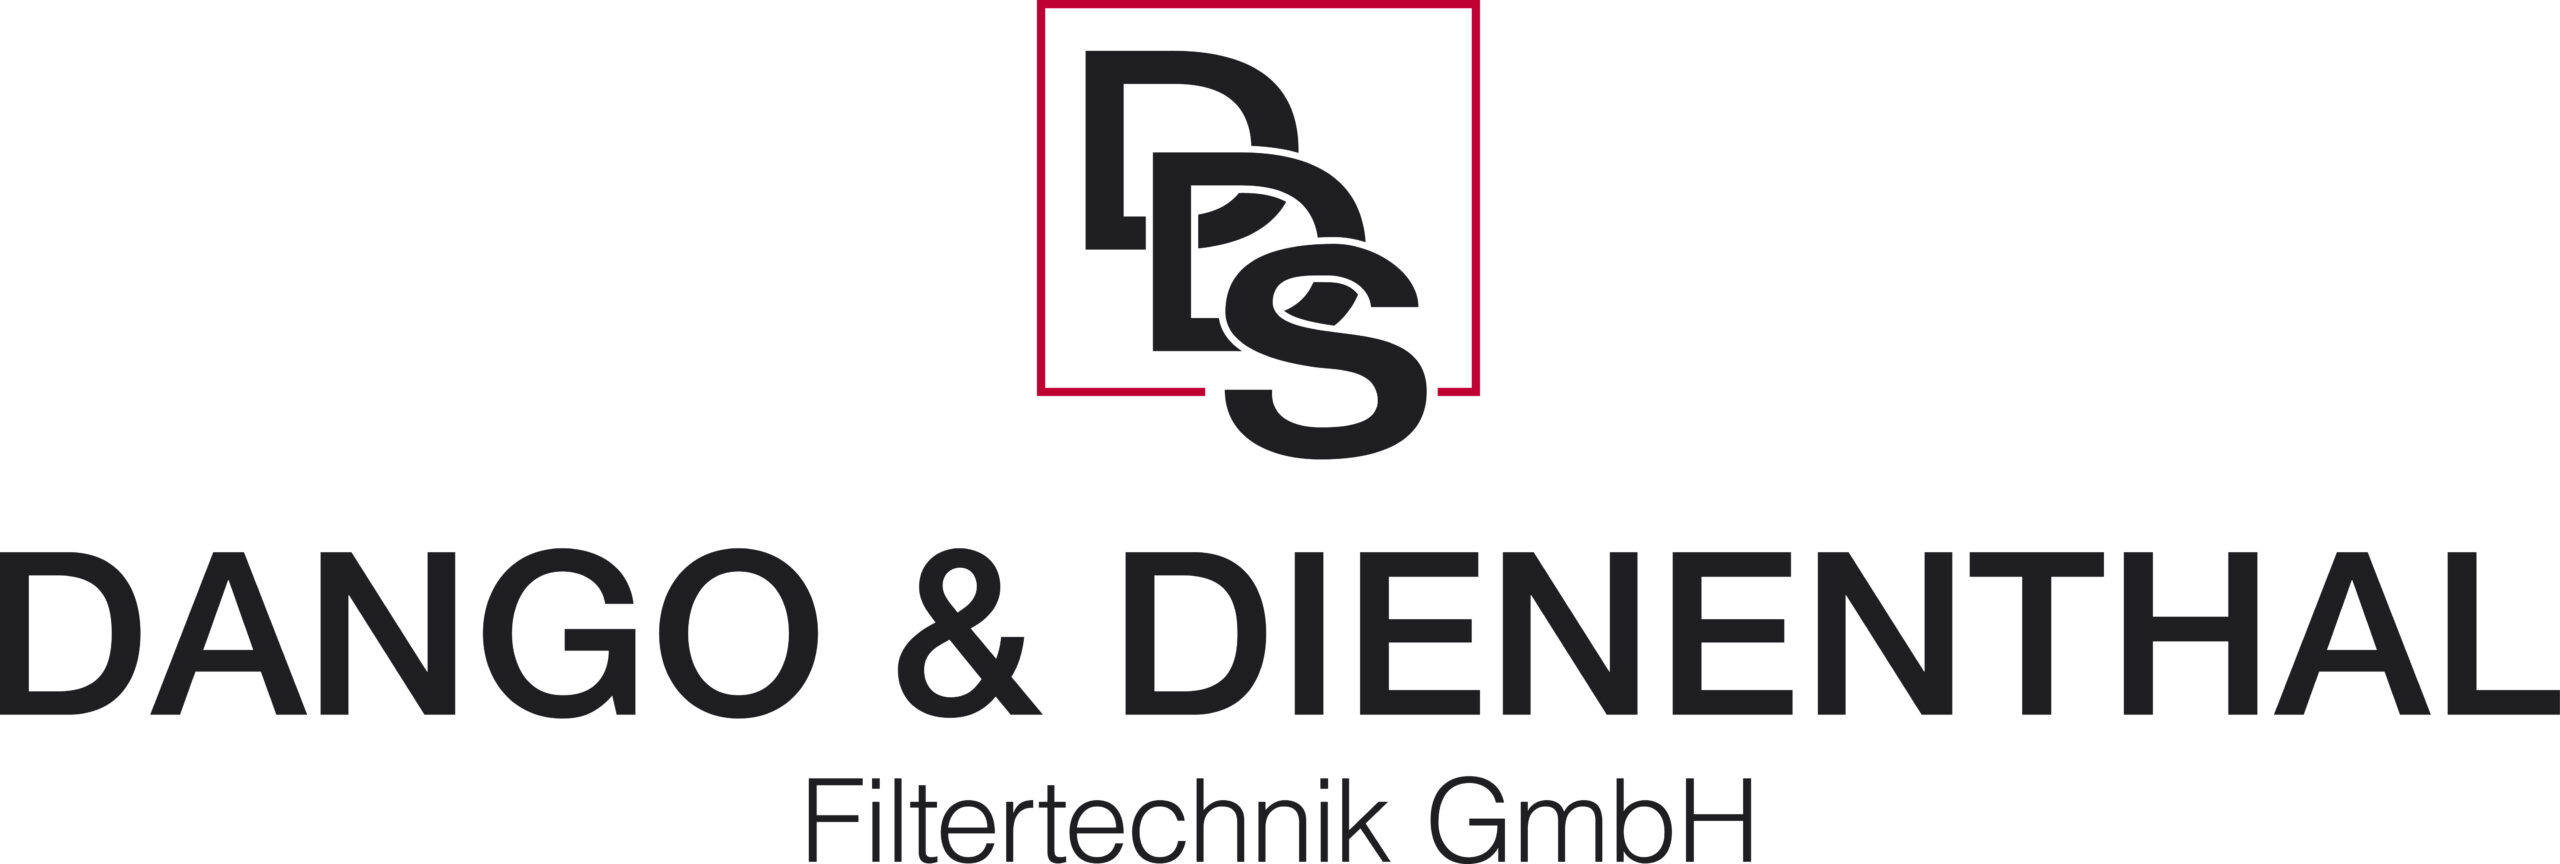 DangoDienenthal-Logo-Filtertechnik